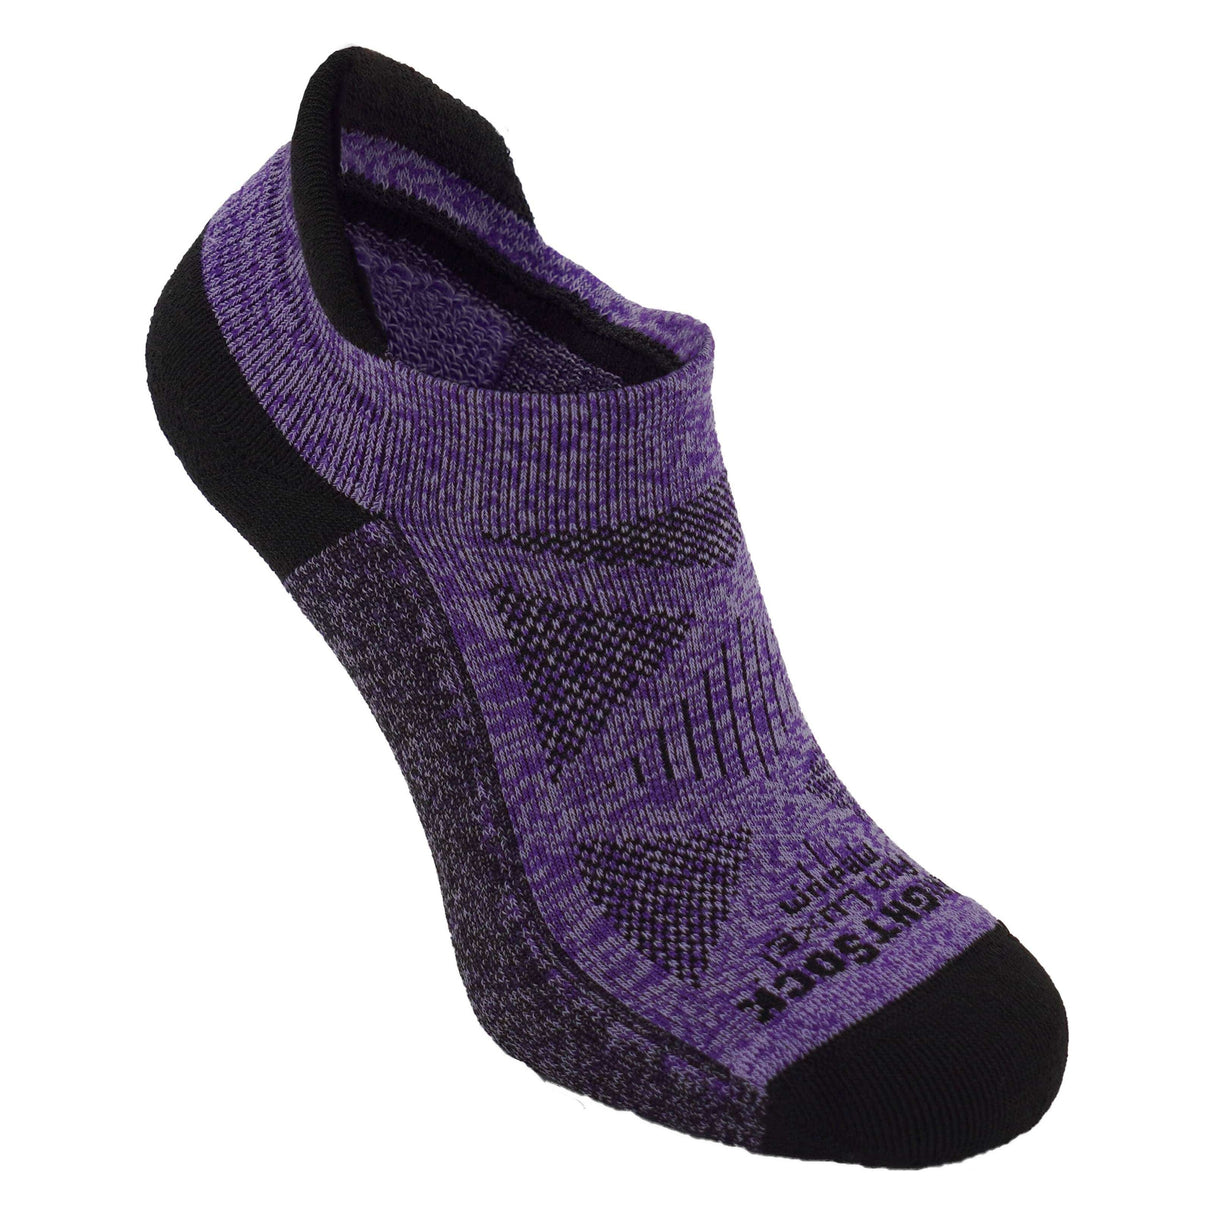 Wrightsock Run Luxe Cushion No Show Tab Socks  -  Small / Purple Black Tye Dye